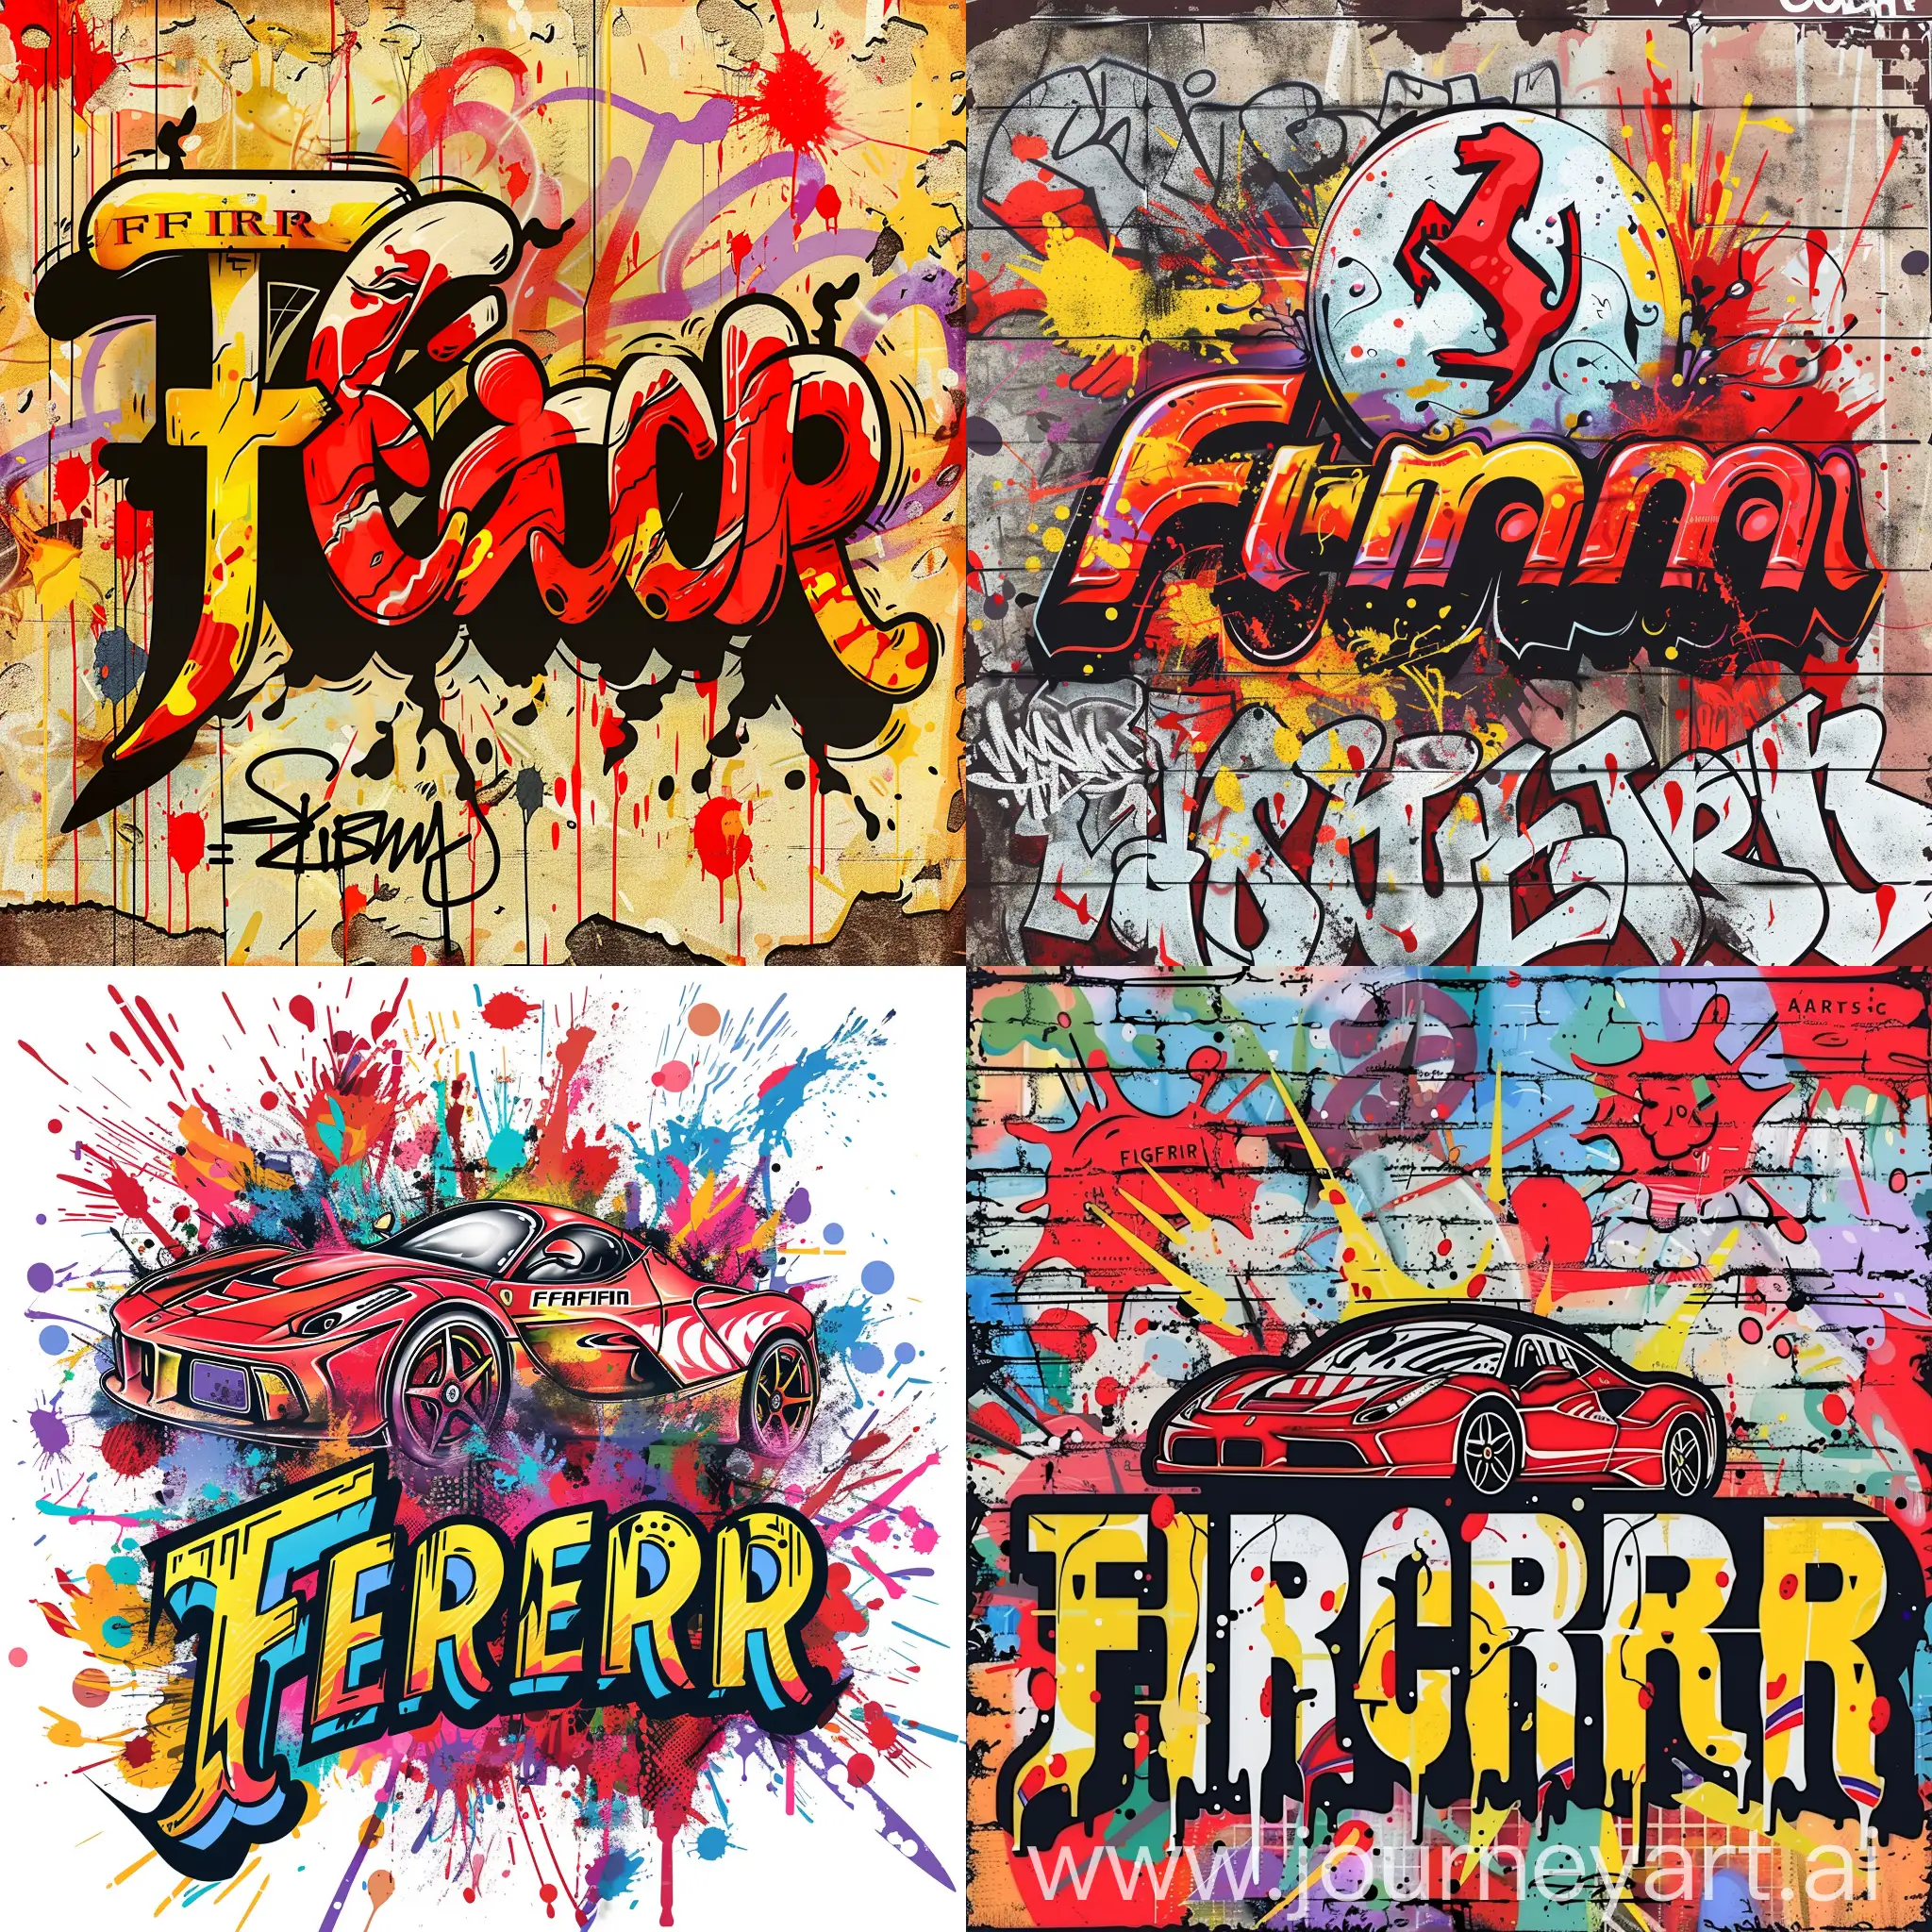 Steert urban style, flat vector illustration graffiti, of ferrari logo , graffiti,vibrant, urban street art style, detailed, random graffiti Texts, paint splash and graffiti text saying 'Ferrari' 